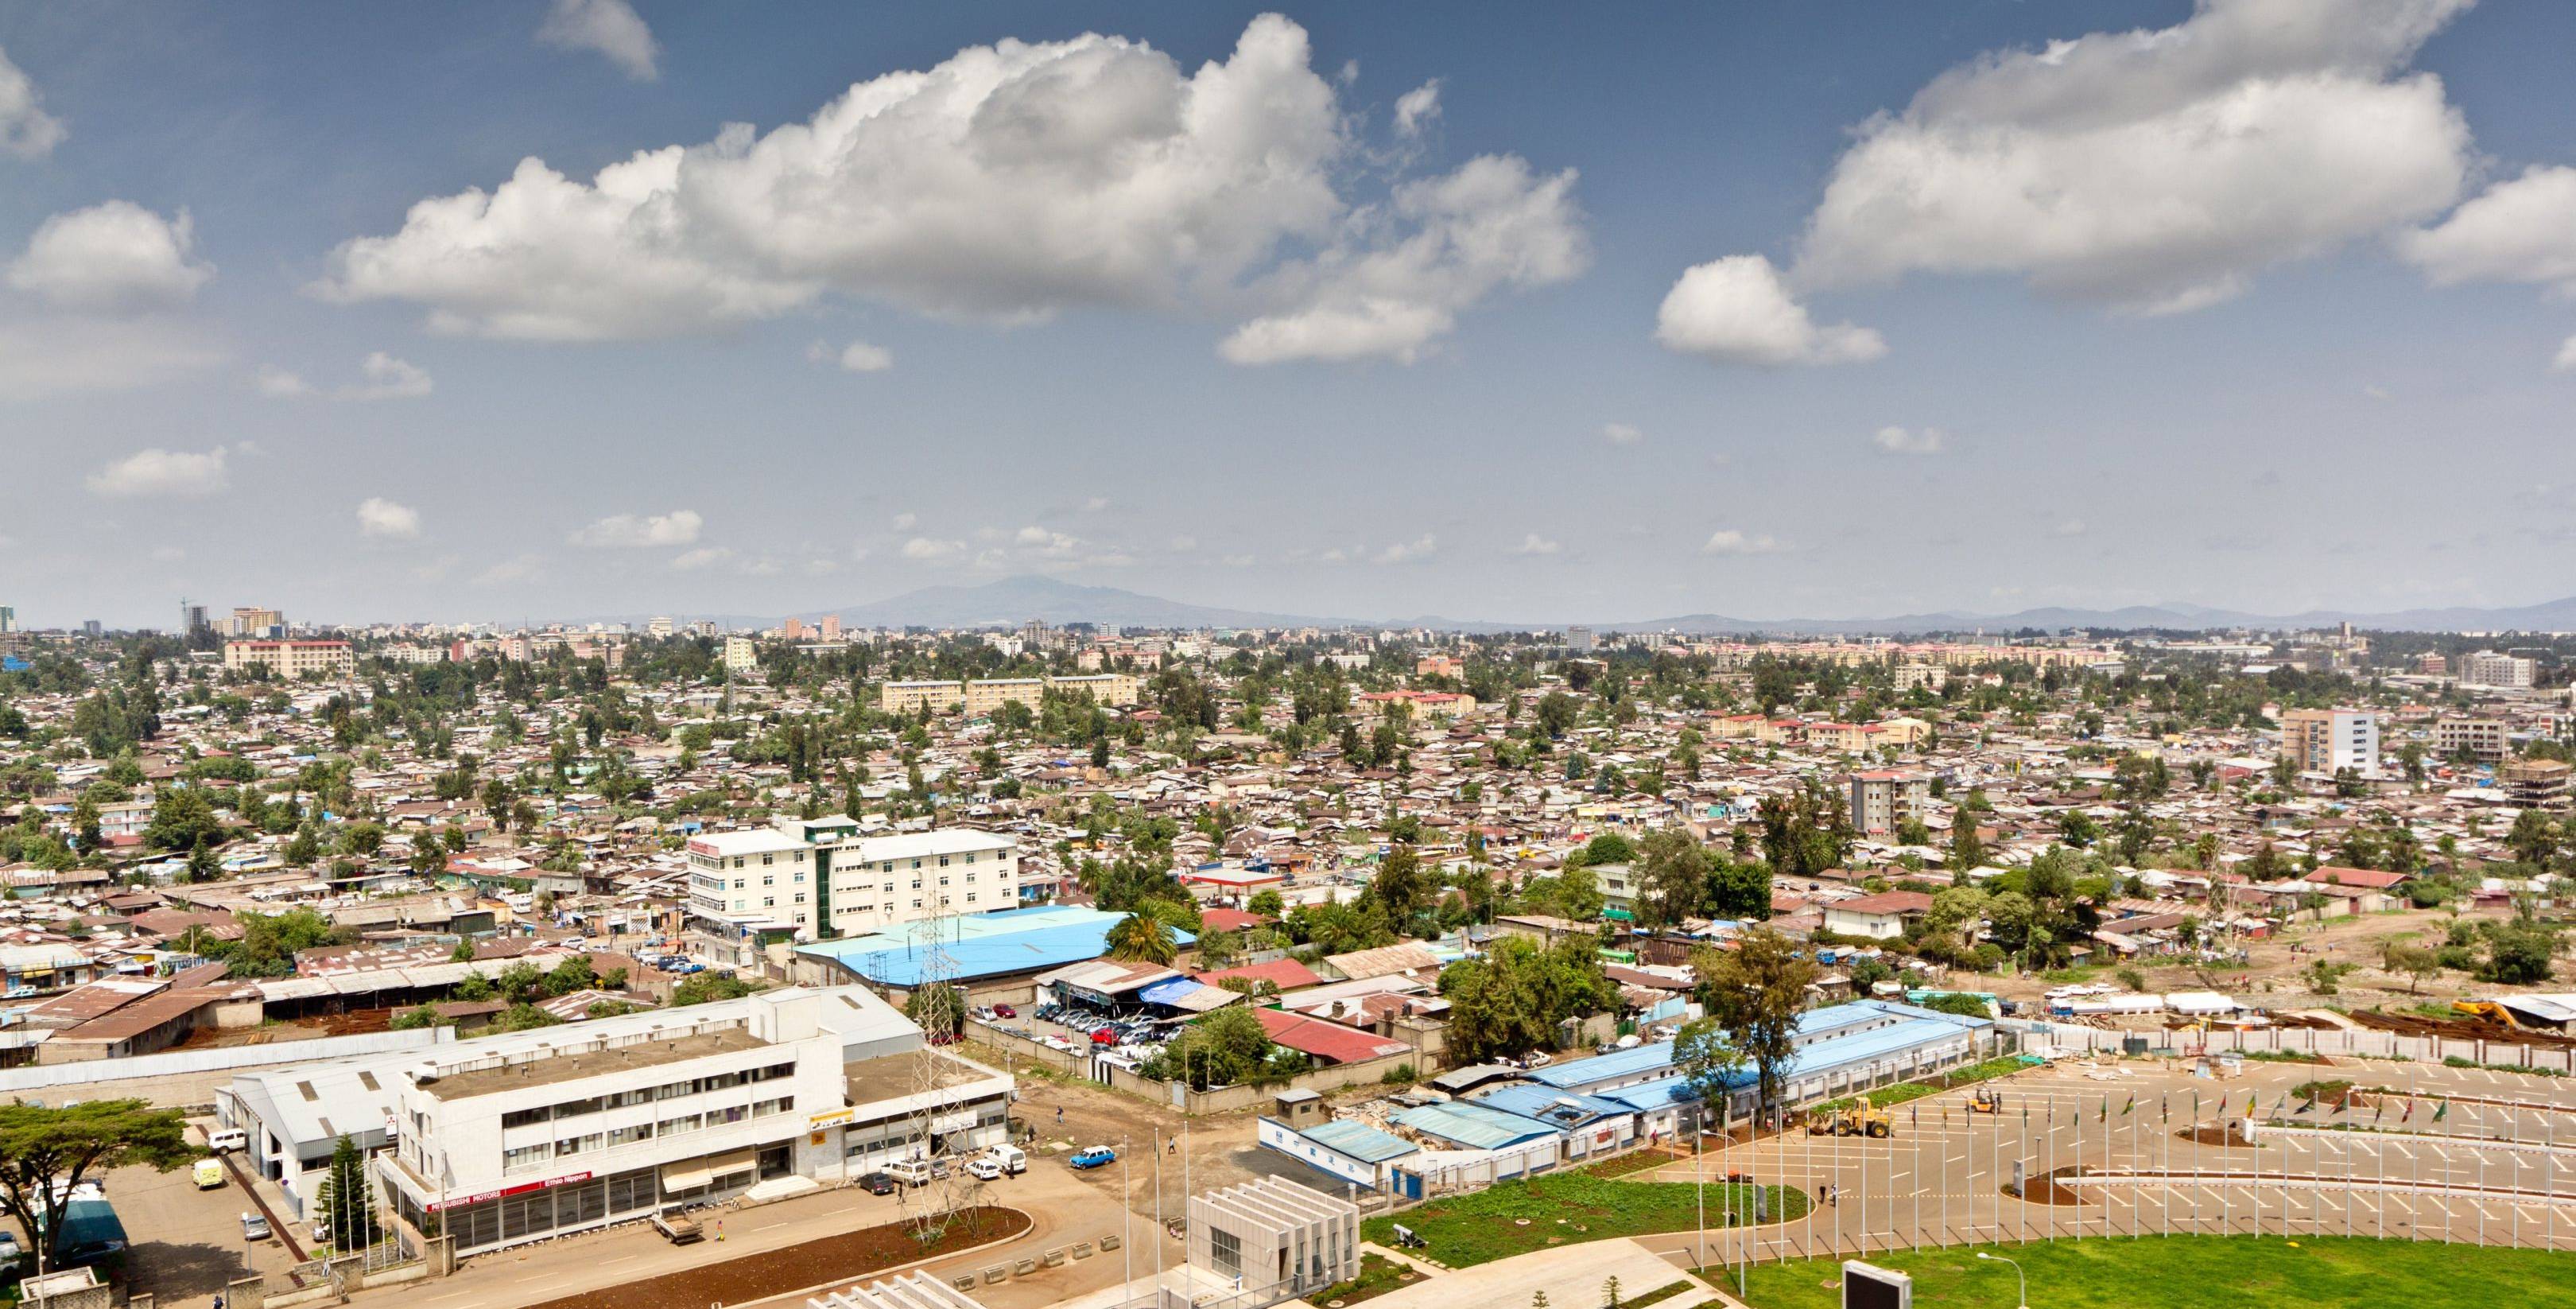 Llegada a Addis Abeba y Visita a la Capital